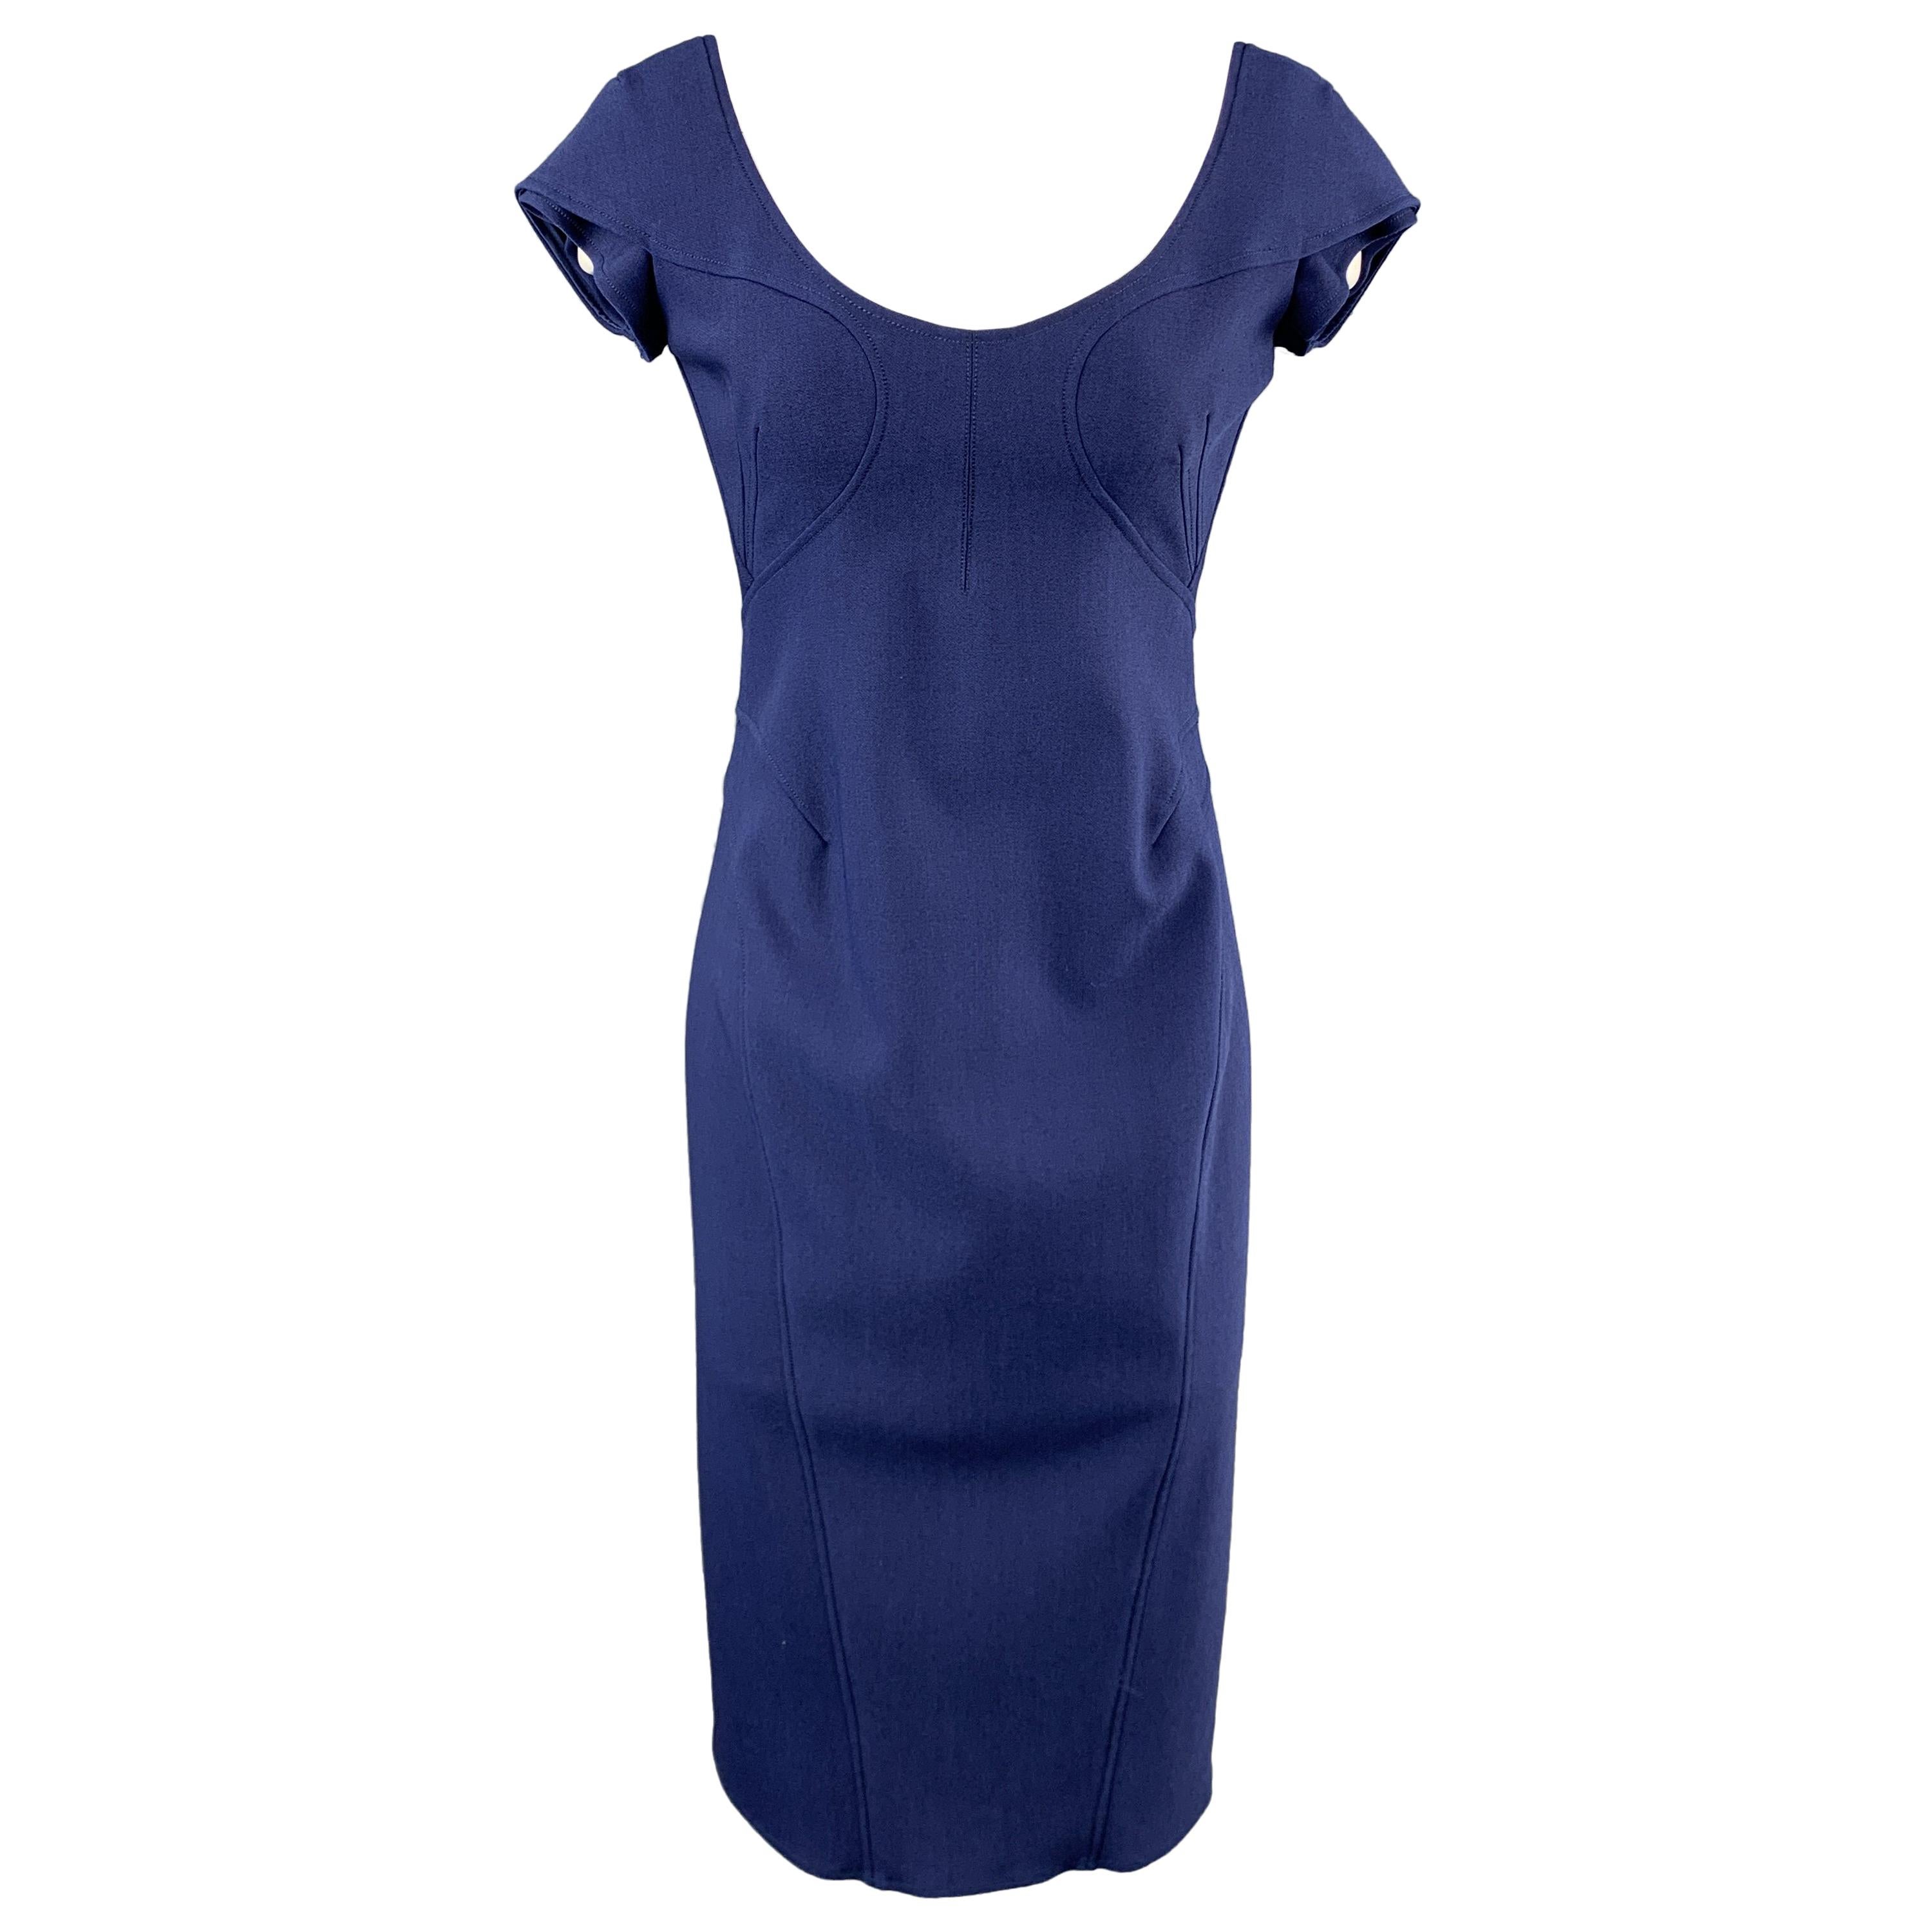 ZAC POSEN Size 6 Navy Blue Stretch Wool Cap Sleeve Sheath Dress